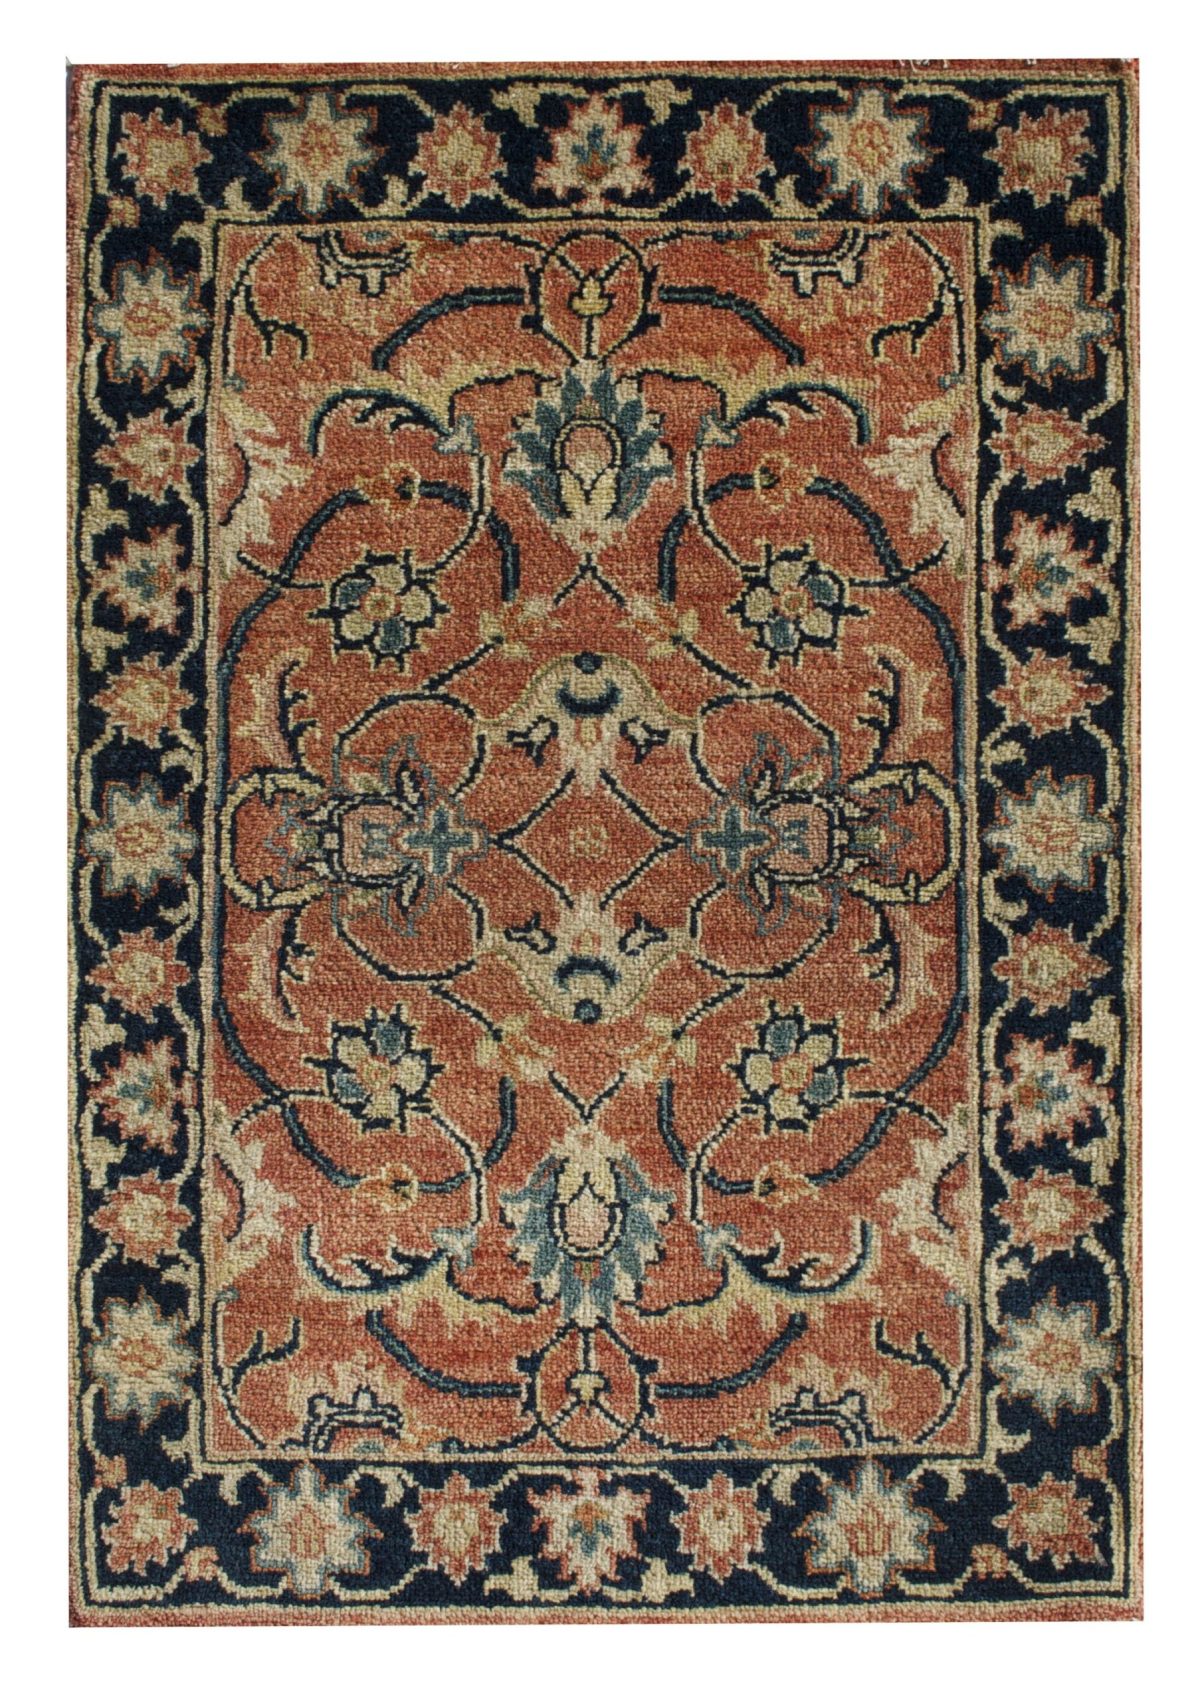 Traditional 2' x 3' Wool Handmade Area Rug - Shabahang Royal Carpet